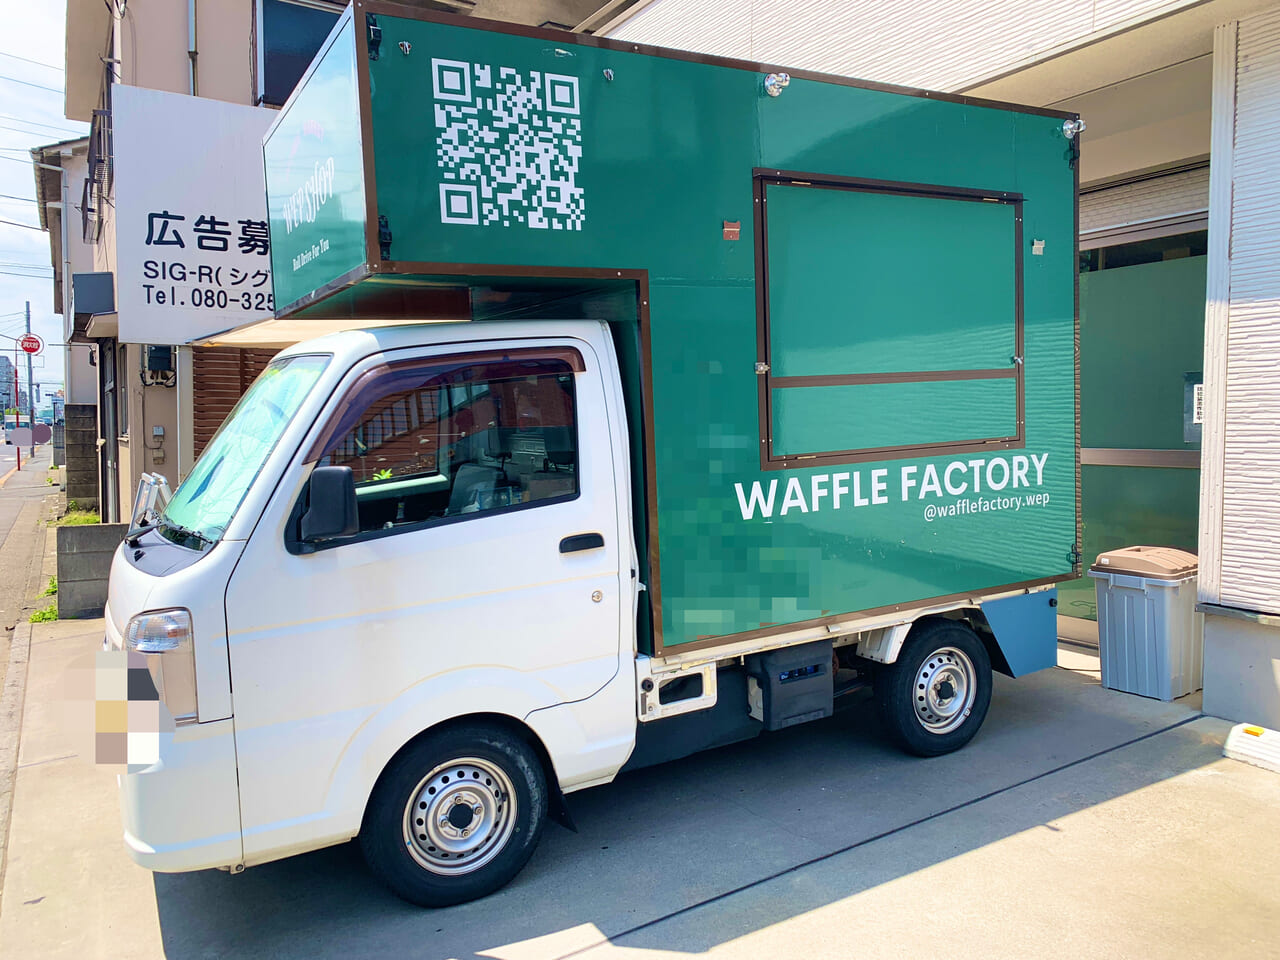 WEP wafflefactory mitaka